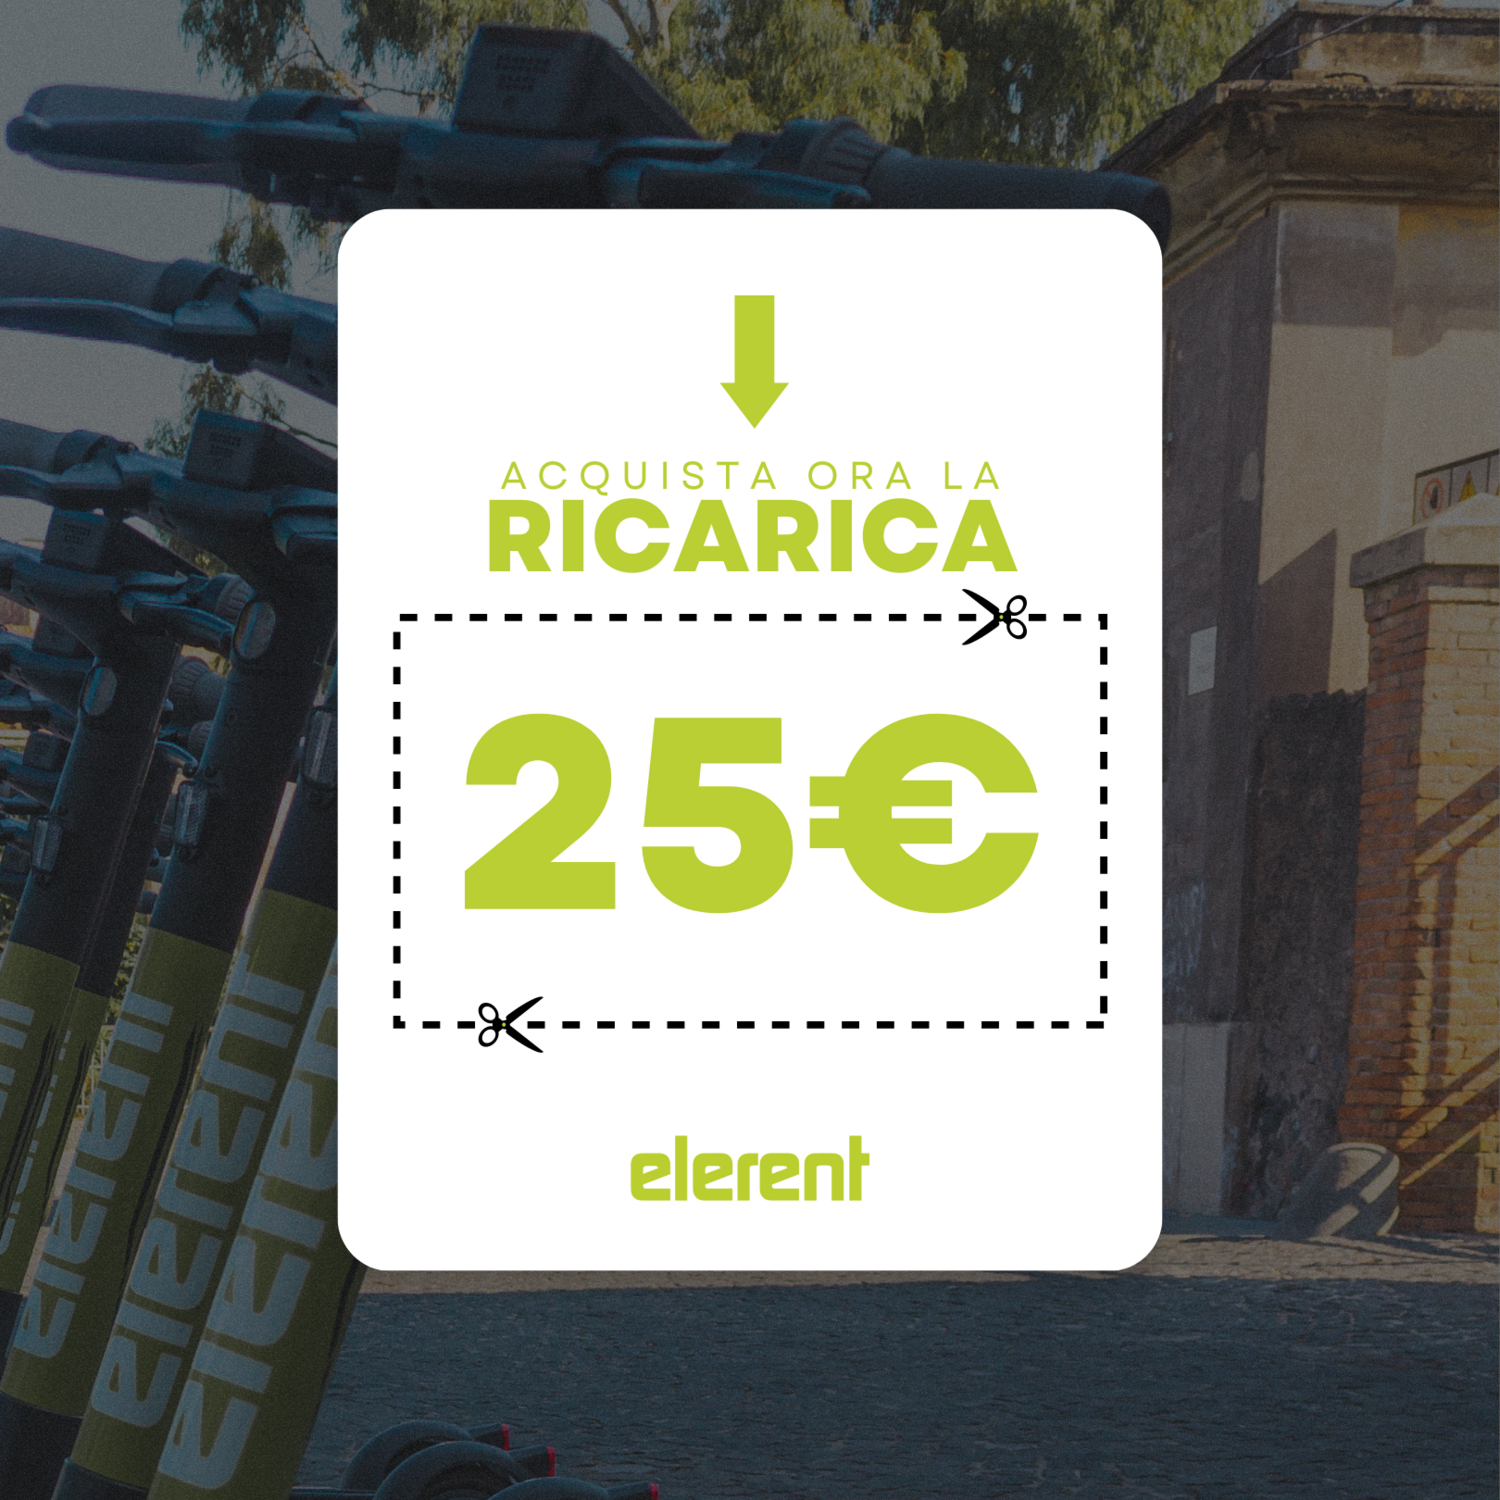 RICARICA ELERENT € 25,00